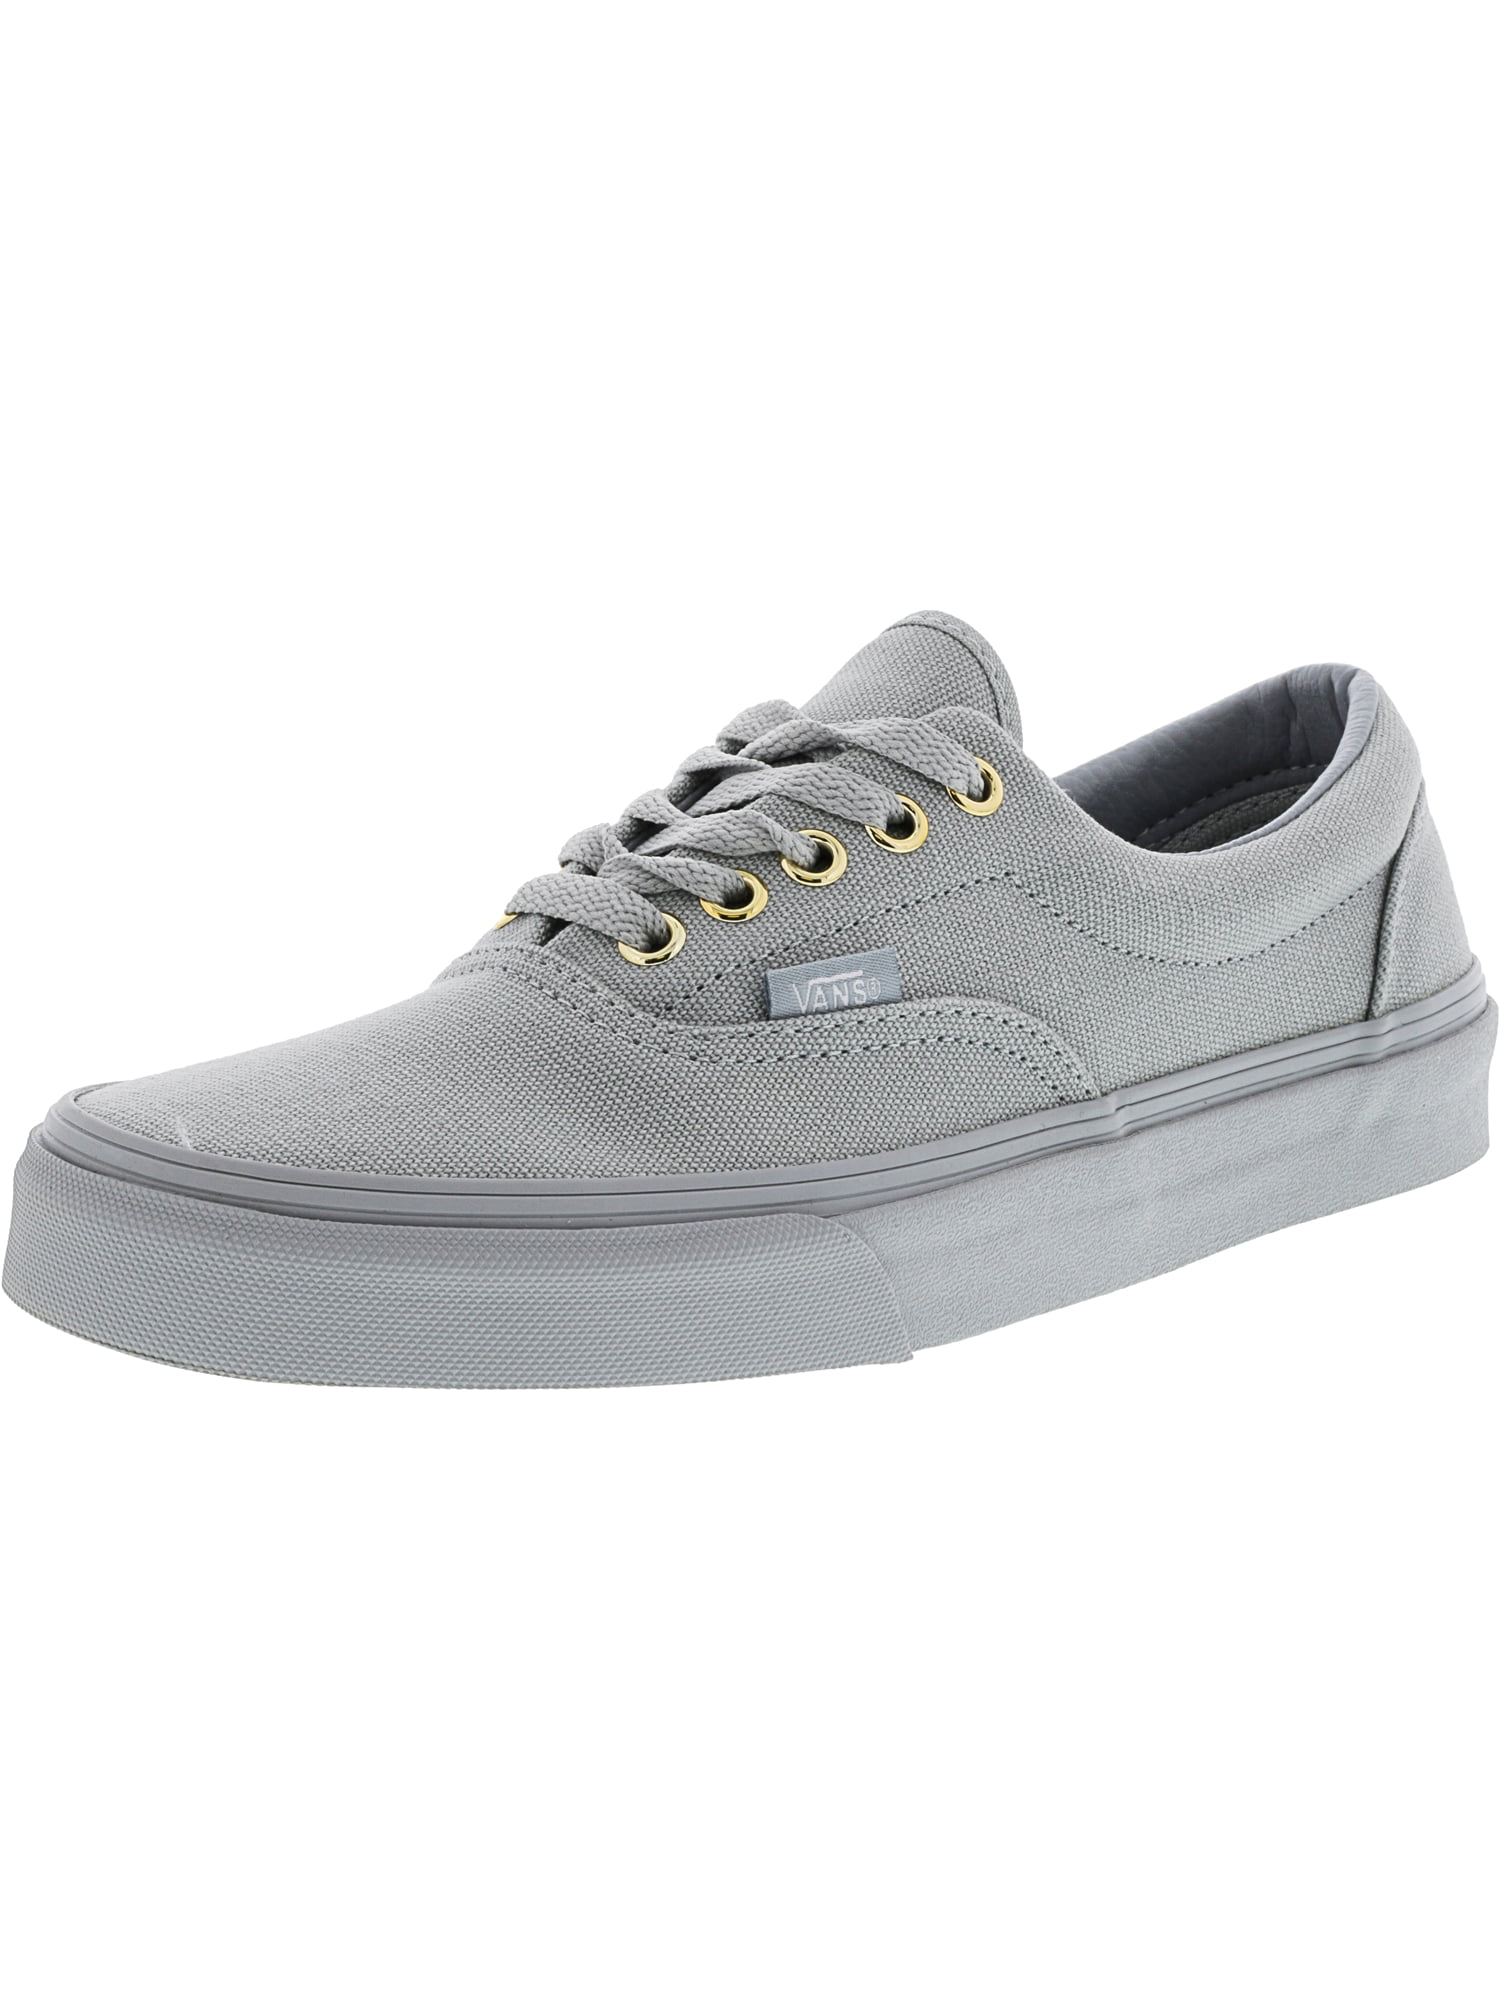 vans era gold mono high rise grey skate shoes